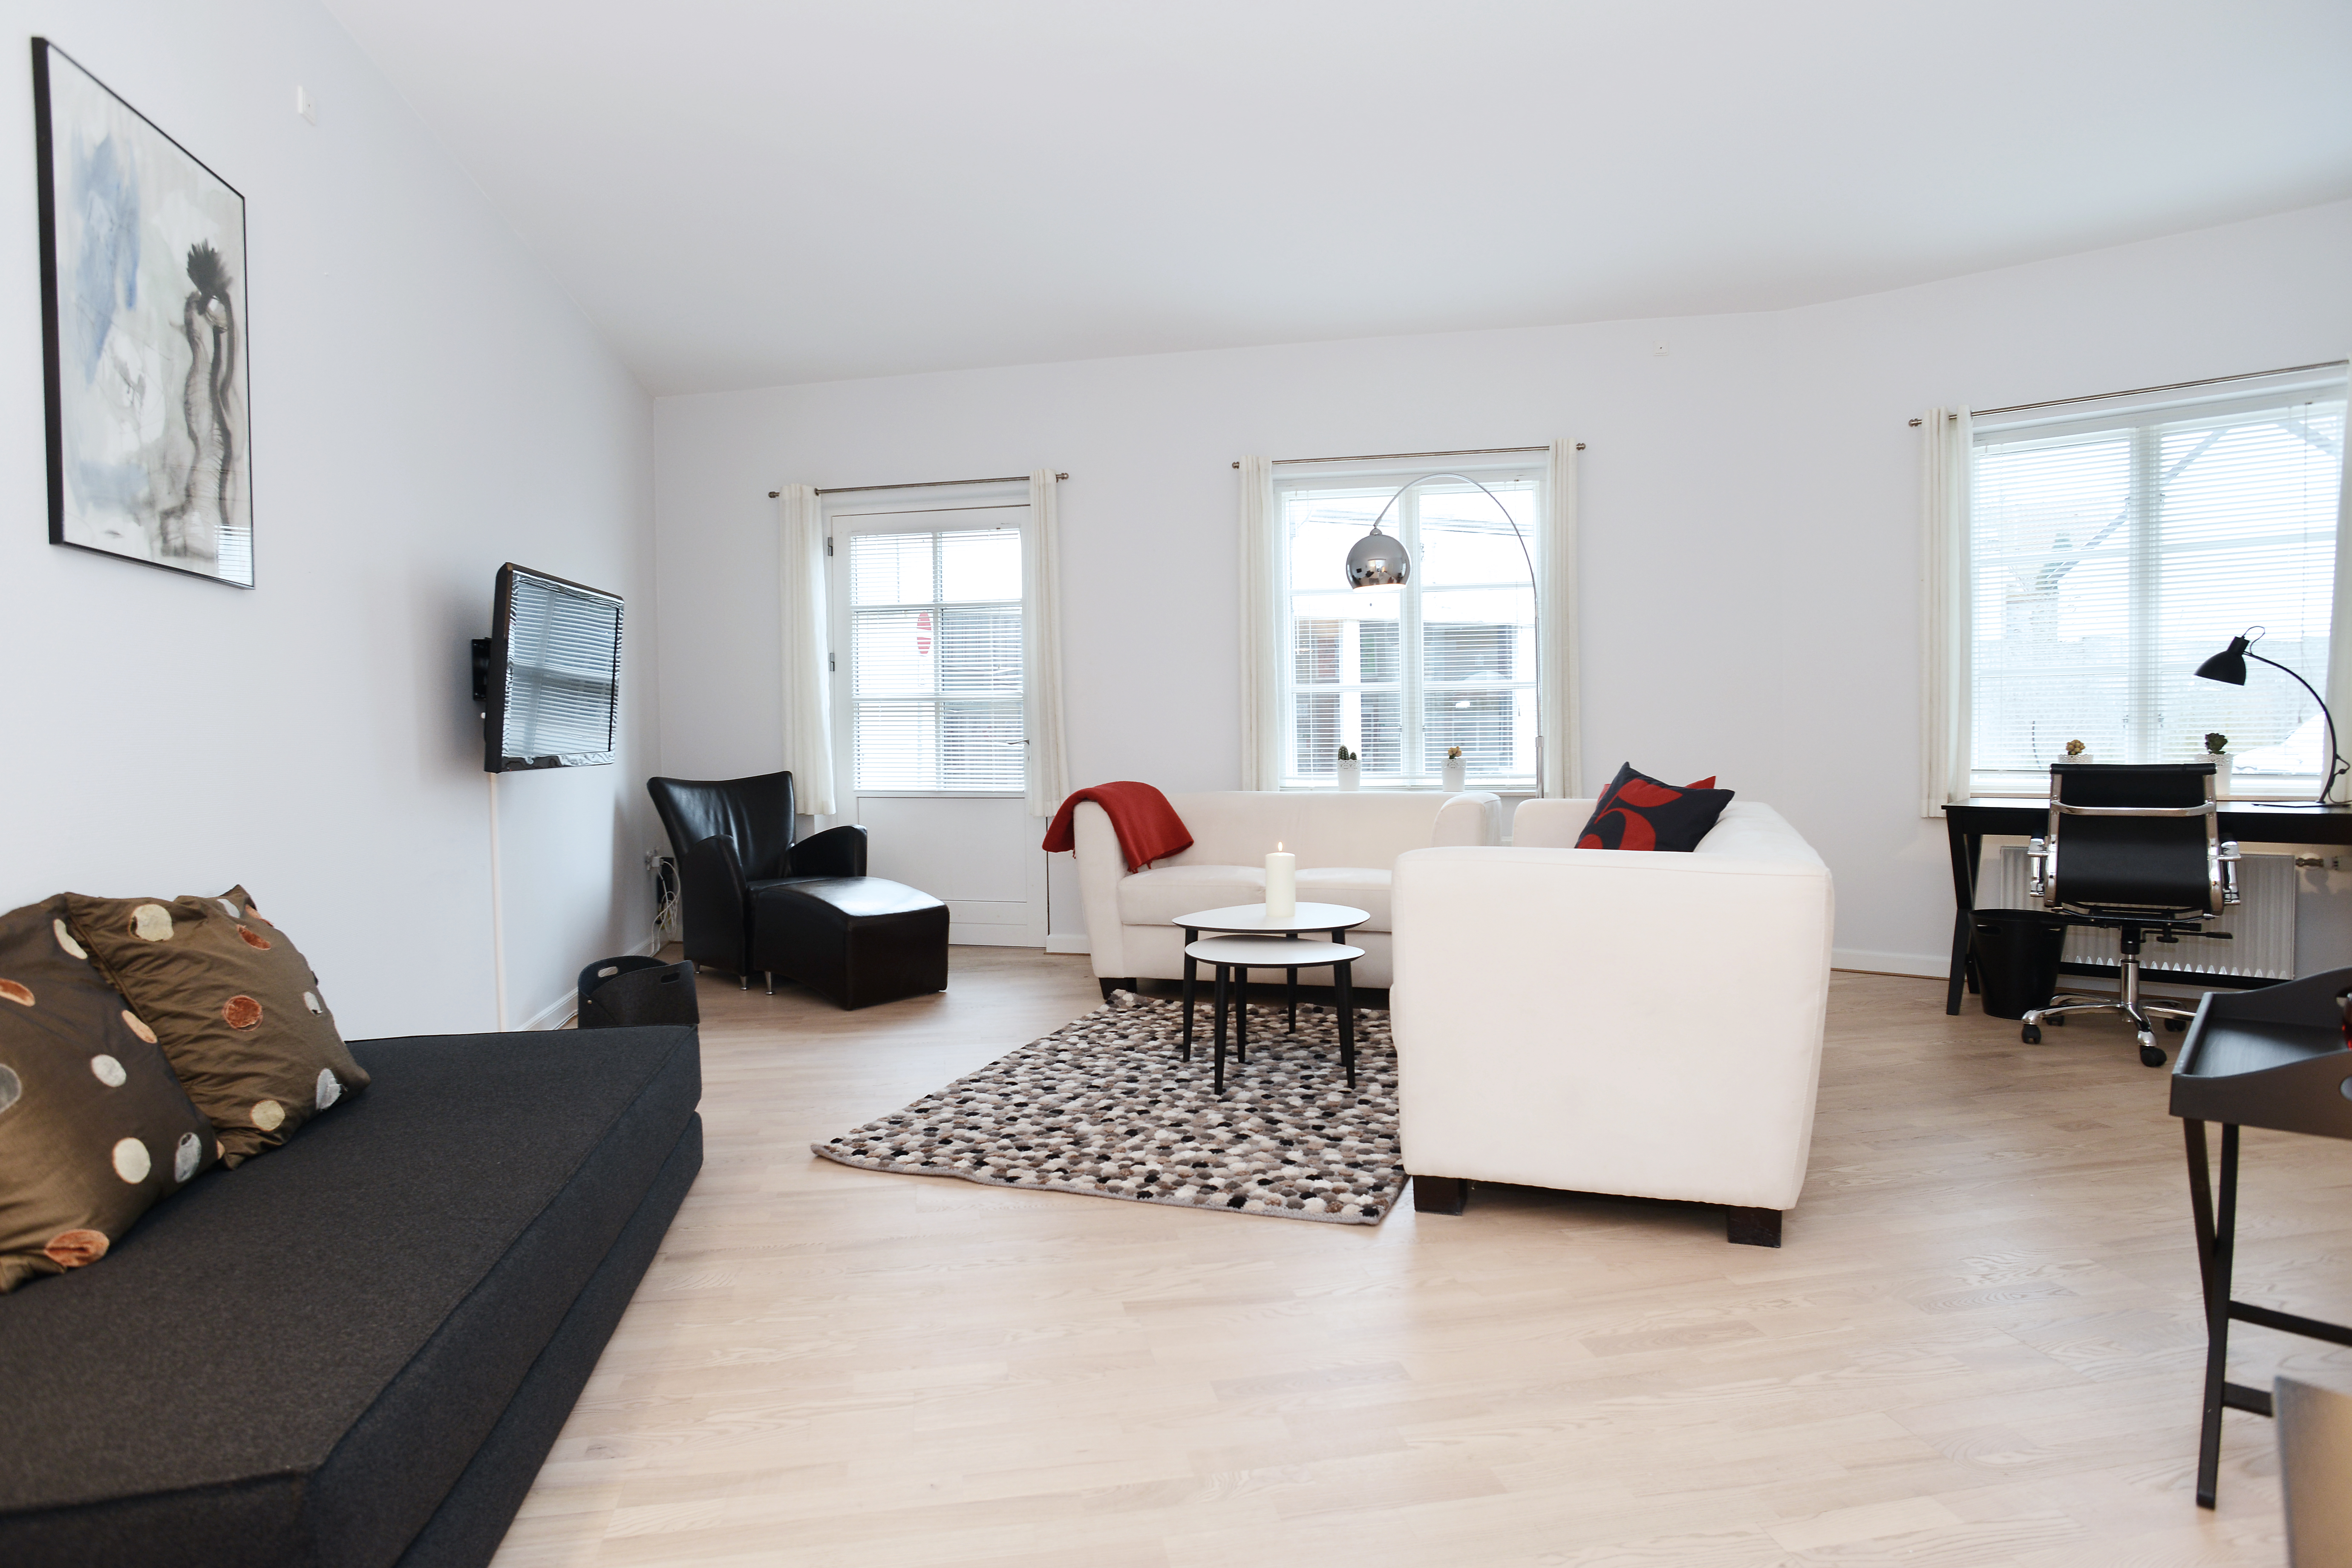 Modern aparments in city center - Apartments for Rent in Sønderborg, Denmark